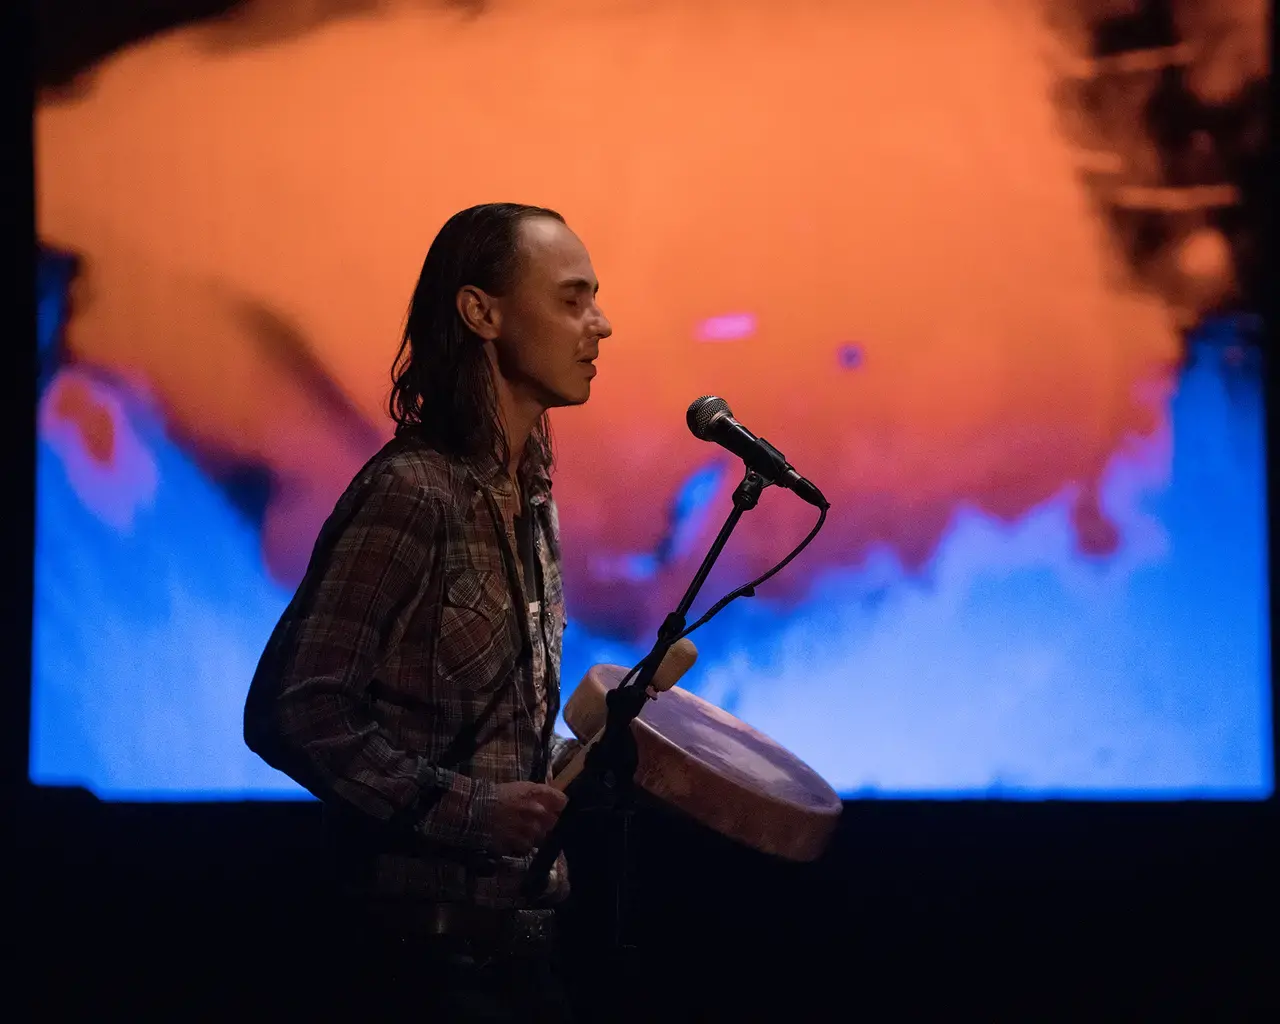 Pew Fellow Julian Talamantez Brolaski performing at the Montalvo Arts Center, Saratoga, California. Photo by Bahara Emami.